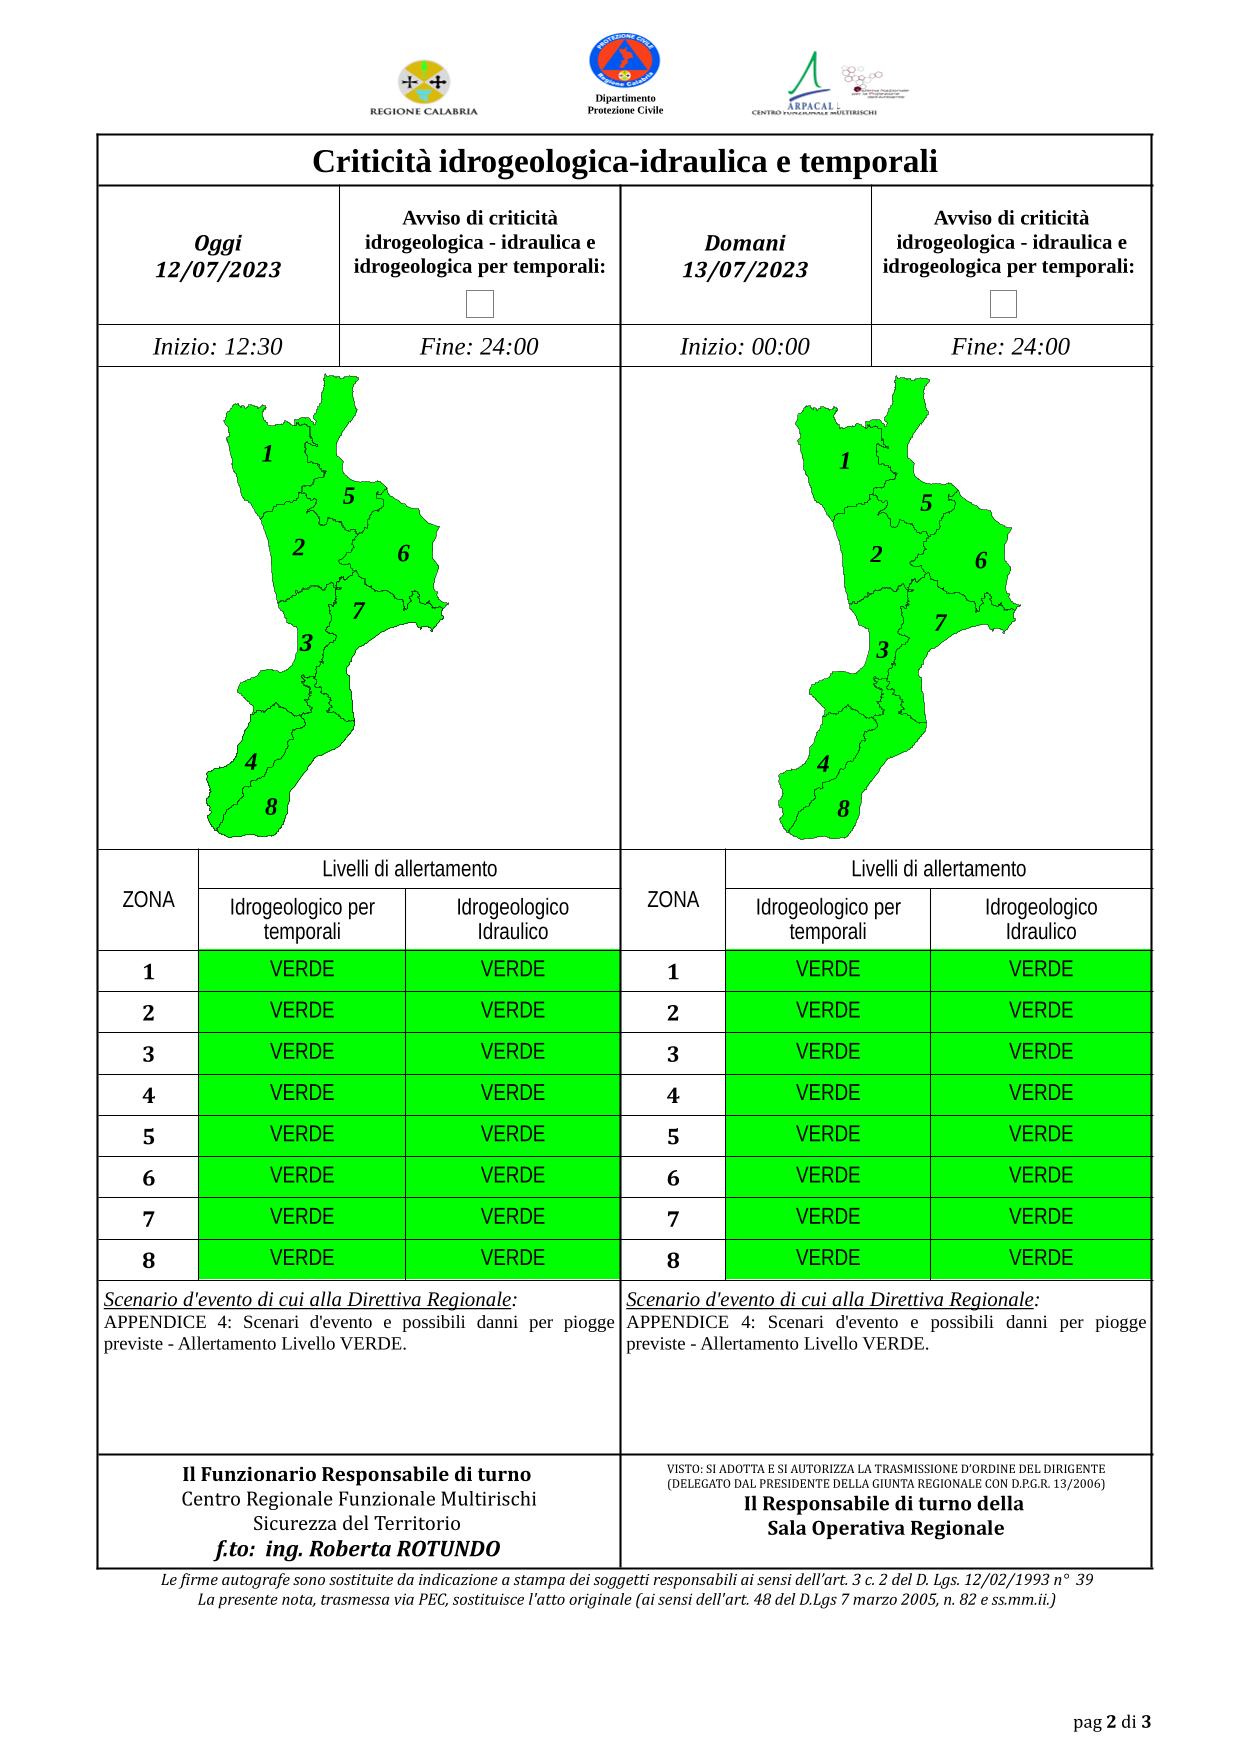 Criticità idrogeologica-idraulica e temporali in Calabria 12-07-2023